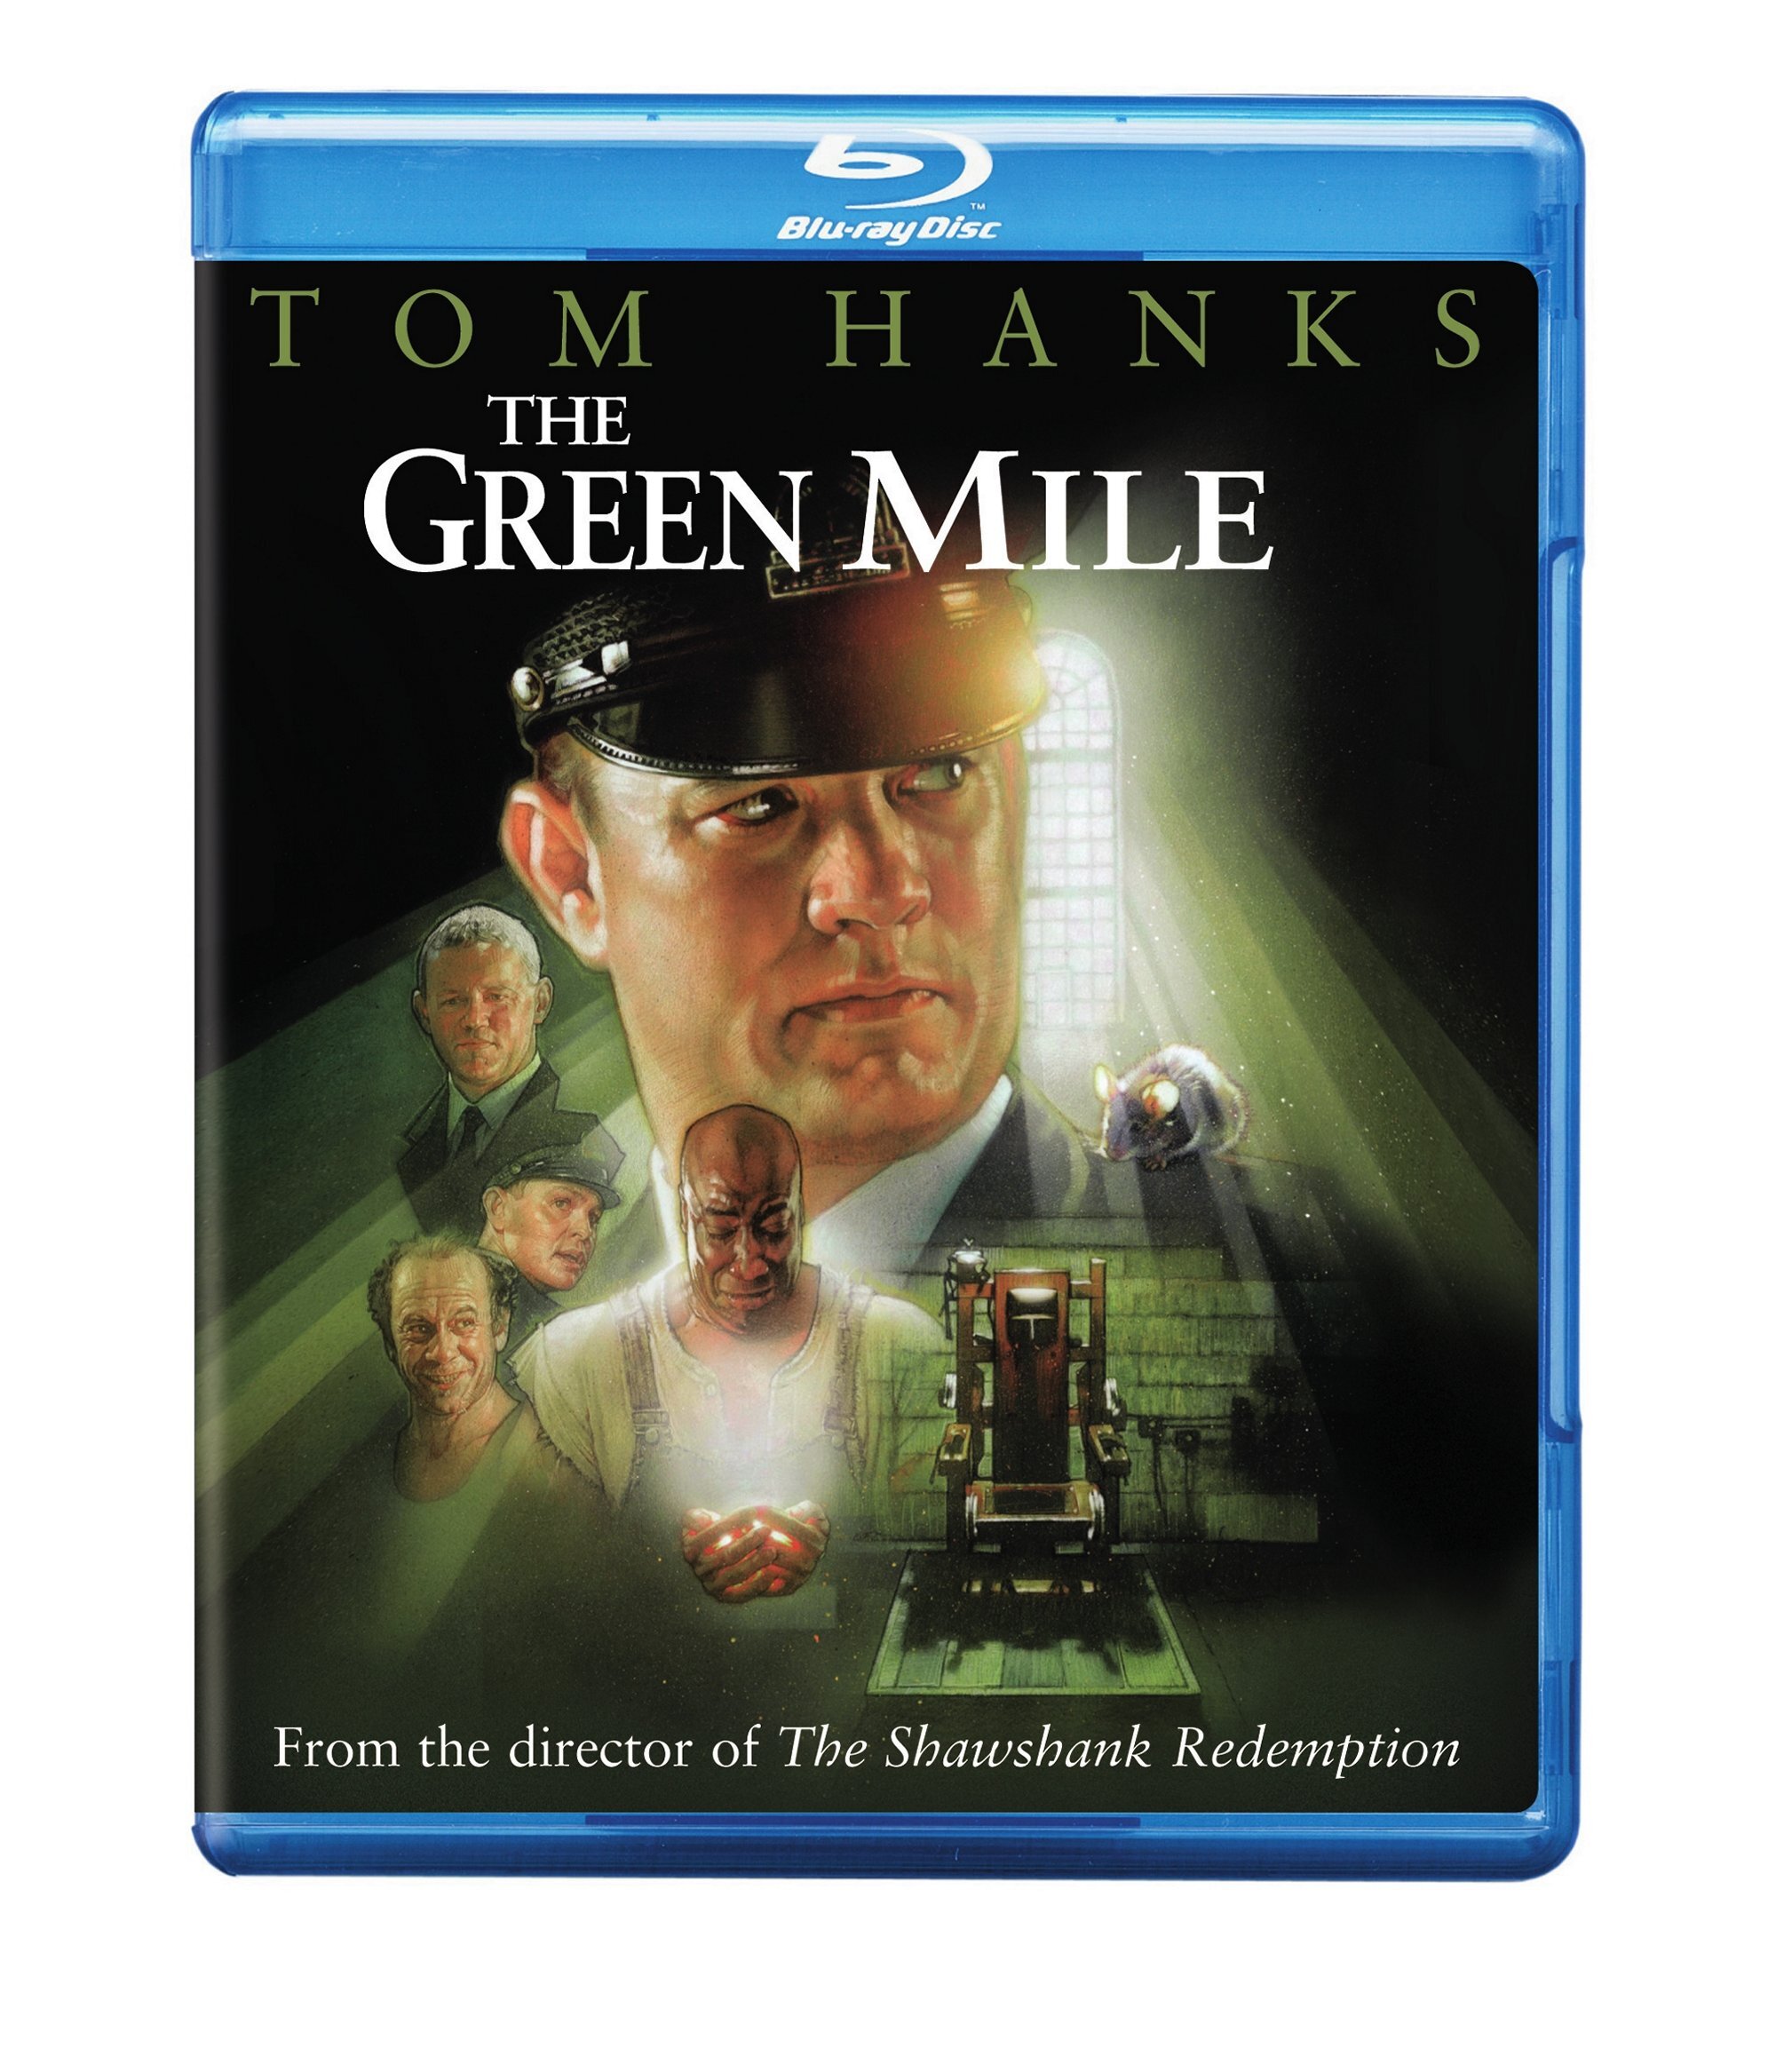 The Green Mile - Blu-ray [ 1999 ]  - Drama Movies On Blu-ray - Movies On GRUV